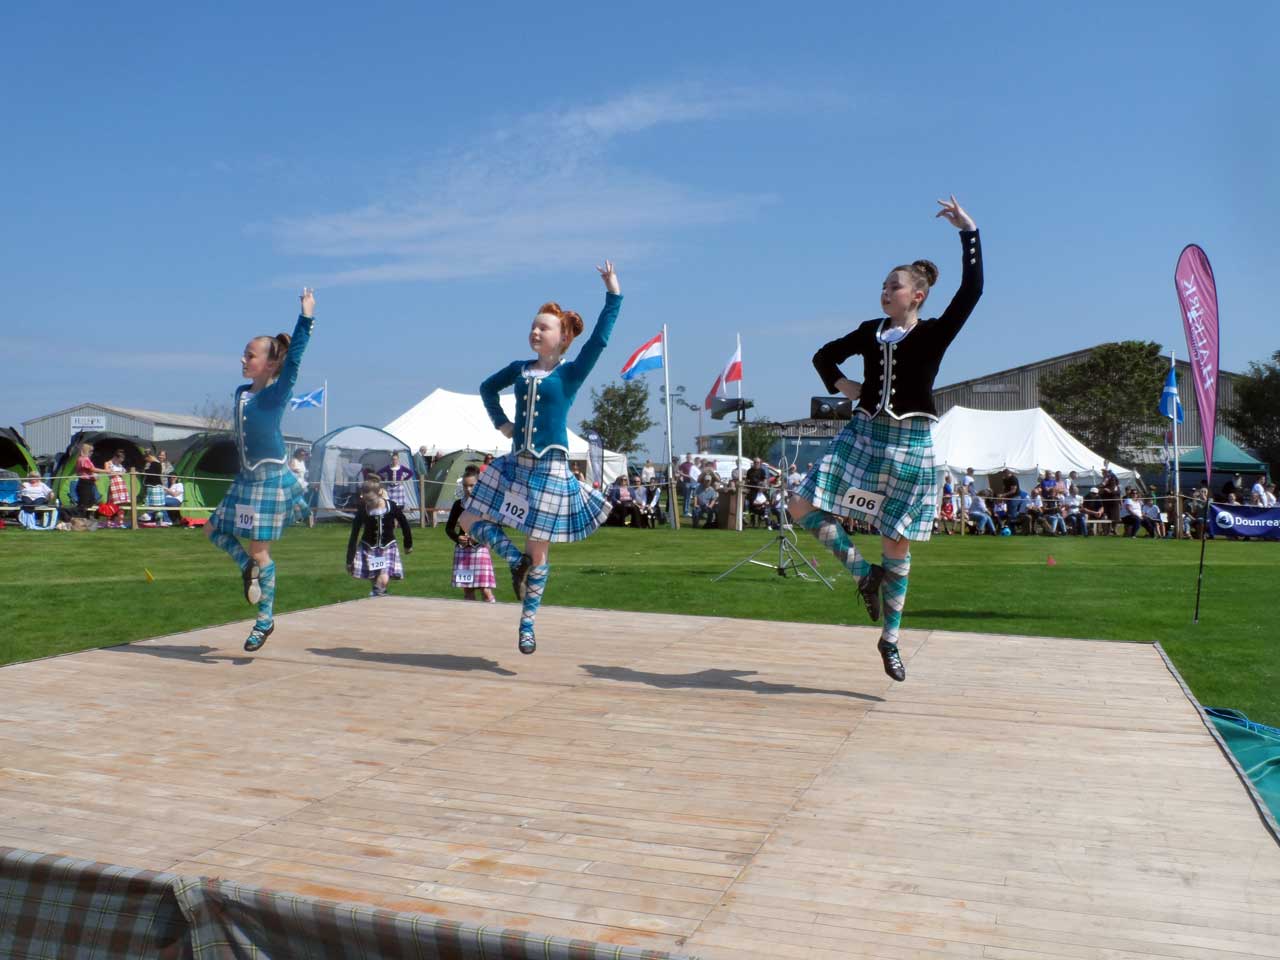 Photo: Halkirk Highland Games 2019